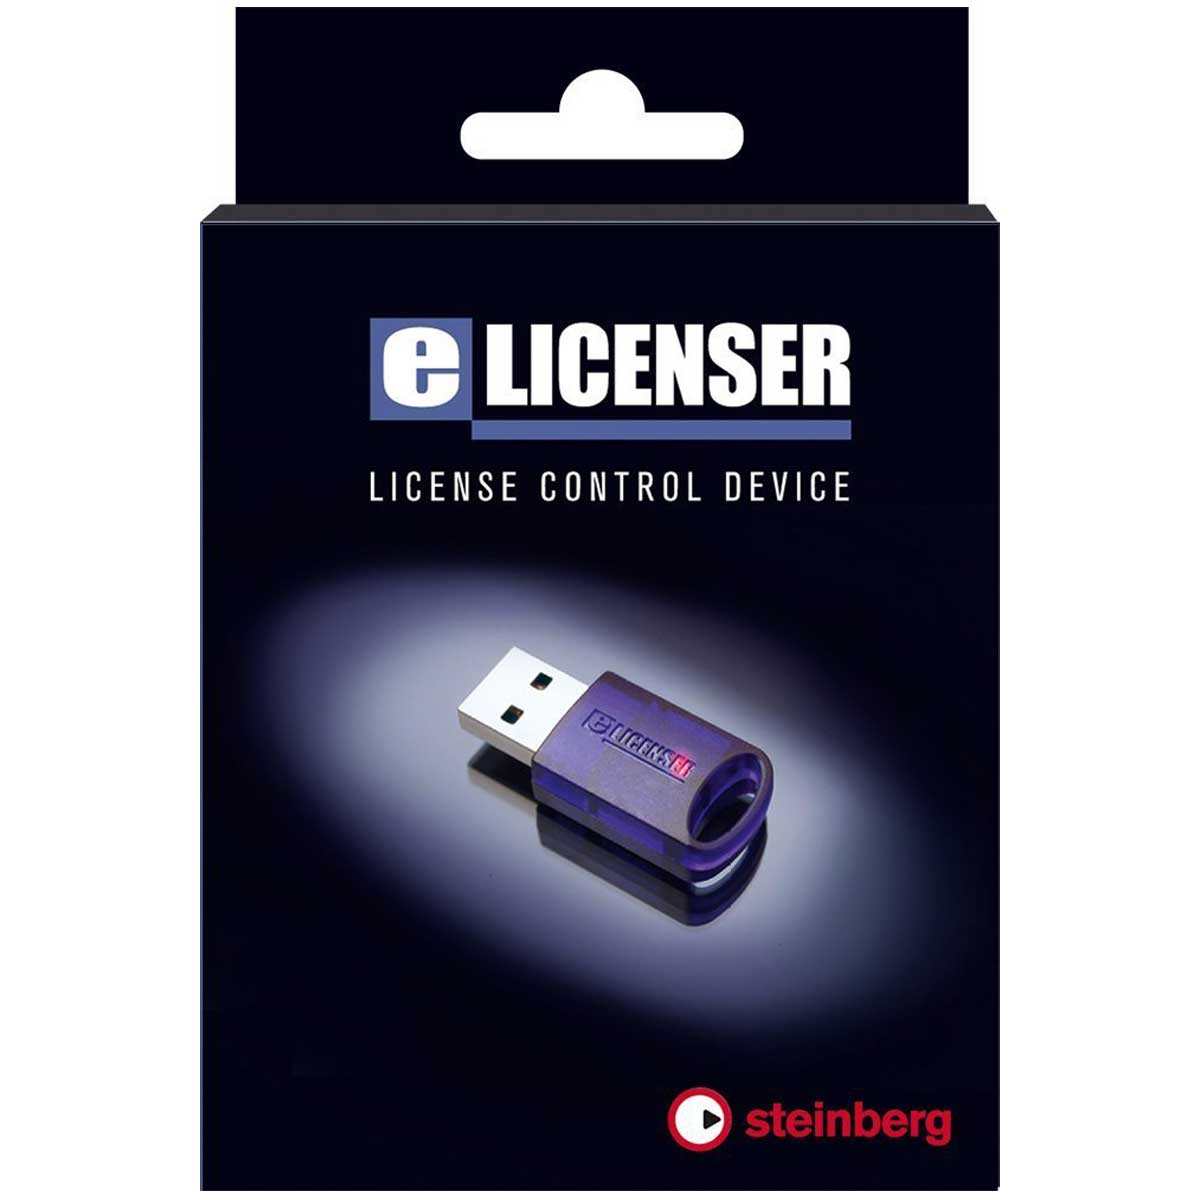 Steinberg Key (USB-eLicenser) − USB プロテクションデバイス Steinberg Key (USB-eLicenser) は Steinberg ソフトウェアをご使用いただく際に必要な USB 接続のプロテクションデバイスです。1個の Steinberg Key に対して複数の Steinberg ソフトウェアのライセンス情報を登録させることができます。 Steinberg ソフトウェアの体験版には Steinberg Key (USB-eLicenser) をオーソライズするためのアクティベーションコードが付属しています。 体験版ソフトウェアをインストールした後にアクティベーションコードを Steinberg Key に適用させると、期間制限内であればすべての機能が通常製品と同様に動作します。 Steinberg Key 1 個に全ての Steinberg 製品のライセンスを記憶可能 Steinberg ソフトウェアの体験版を起動可能 Steinberg Key に登録されている製品情報をリスト表示可能 ※2009年夏より、Steinberg Key は USB-eLicenserと改称し、今後出荷される新製品及び現行製品には USB-eLicenser が同梱されていきます。Steinberg Key と USB-eLicenser の機能に差はありません。